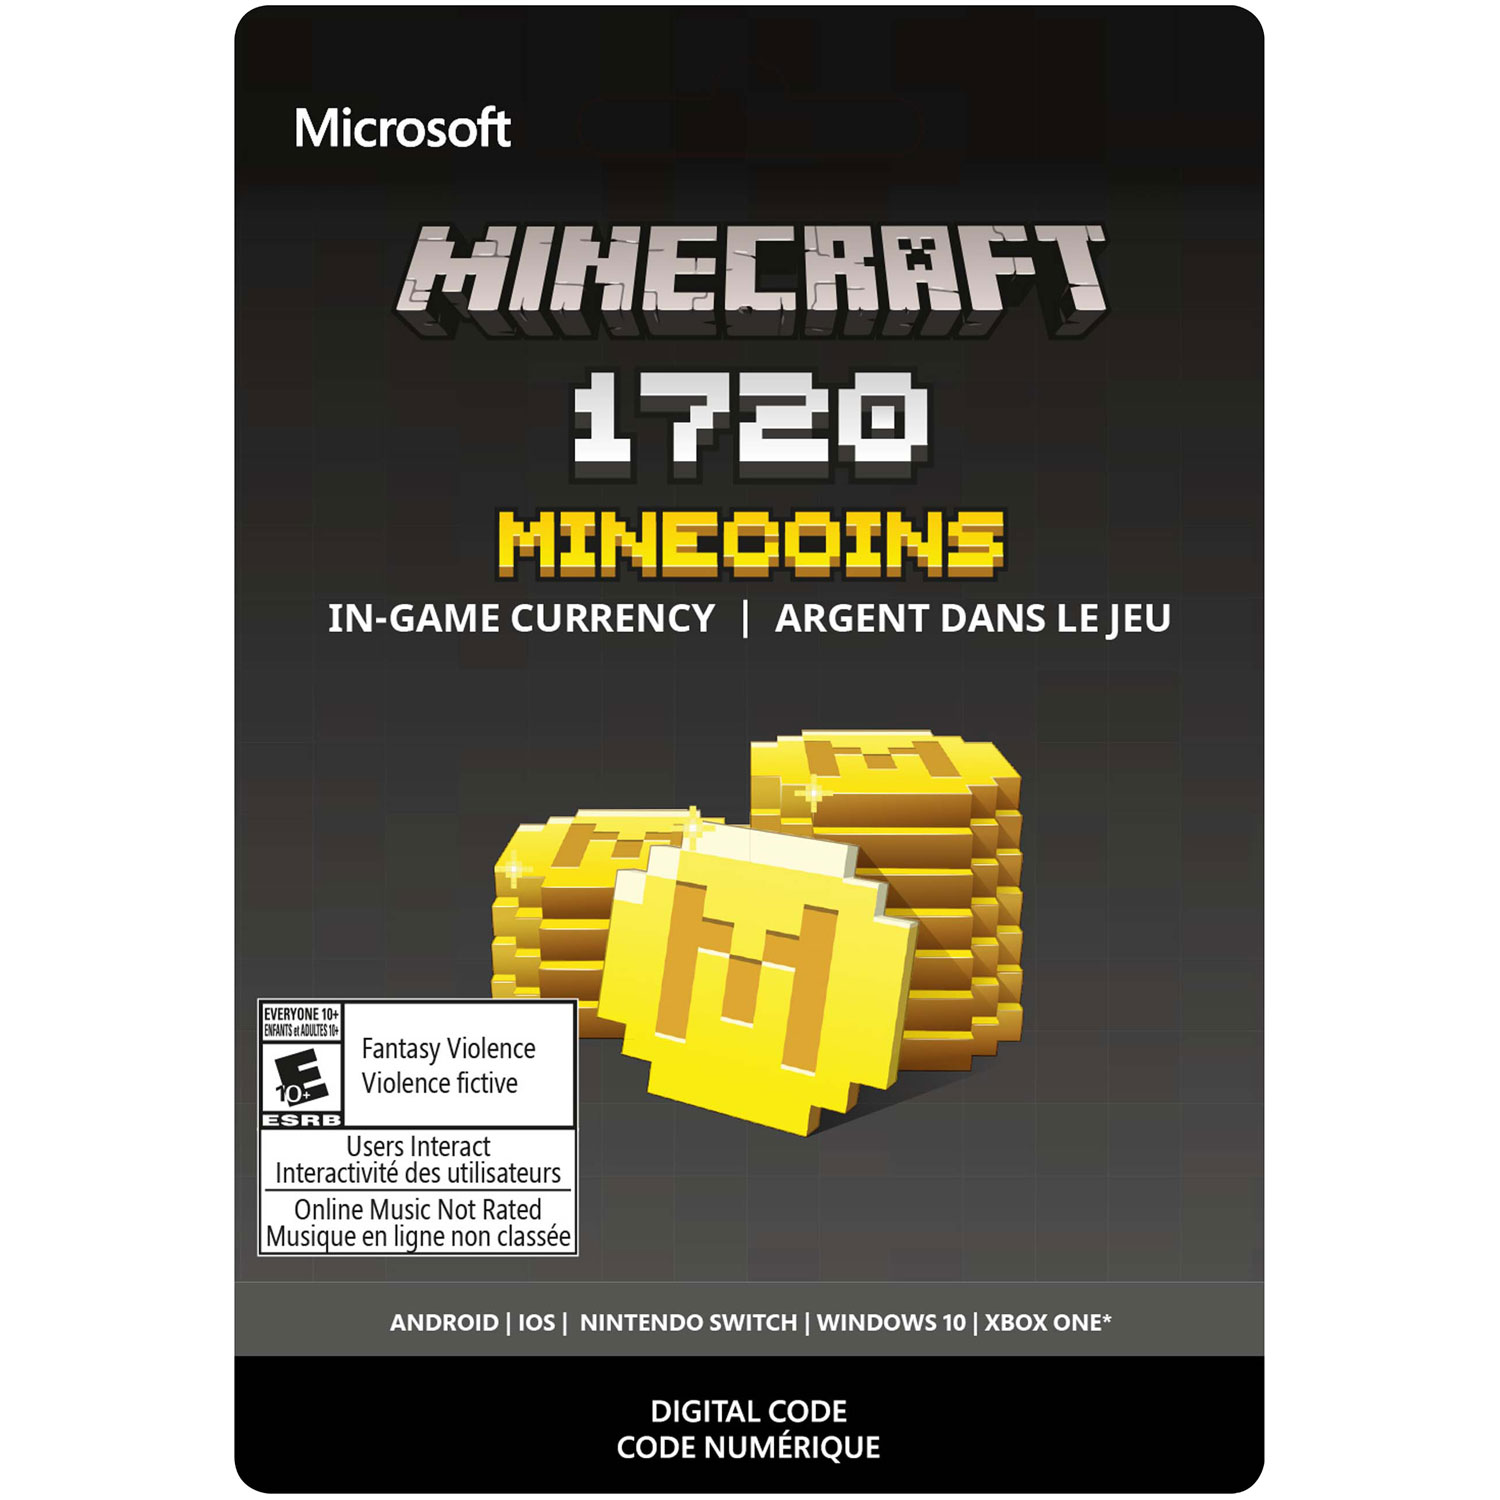 Minecraft - 1720 Minecoins (Xbox One) - Digital Download